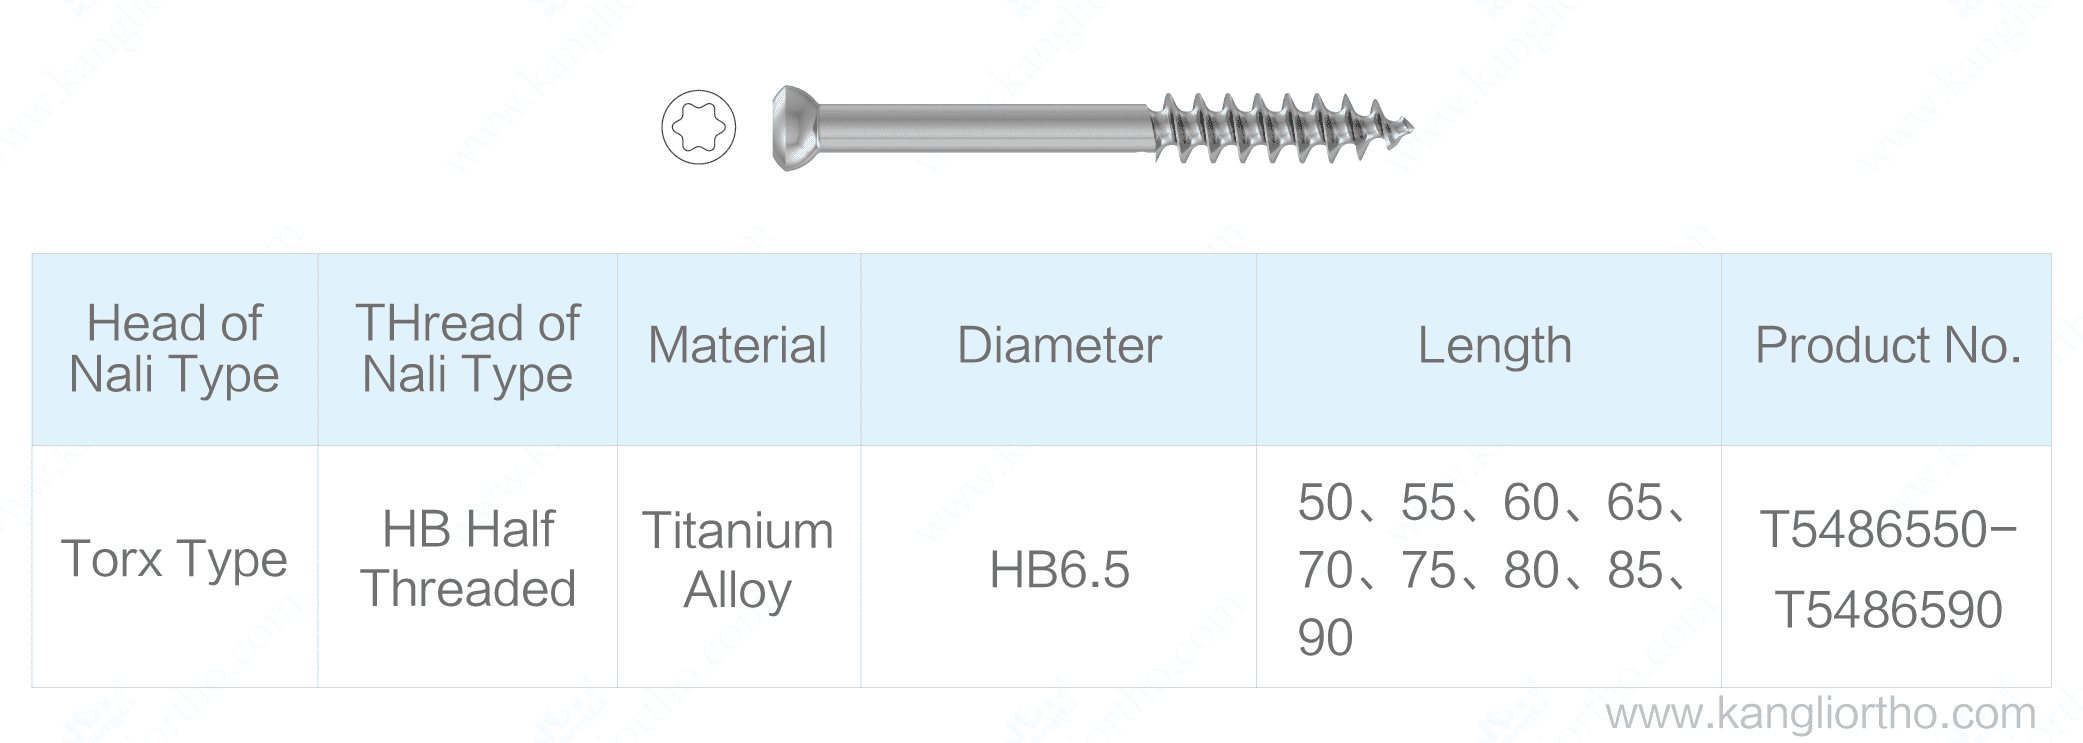 metal-bone-fracture-screw-torx-type-hb6-5-half-threaded-specifications